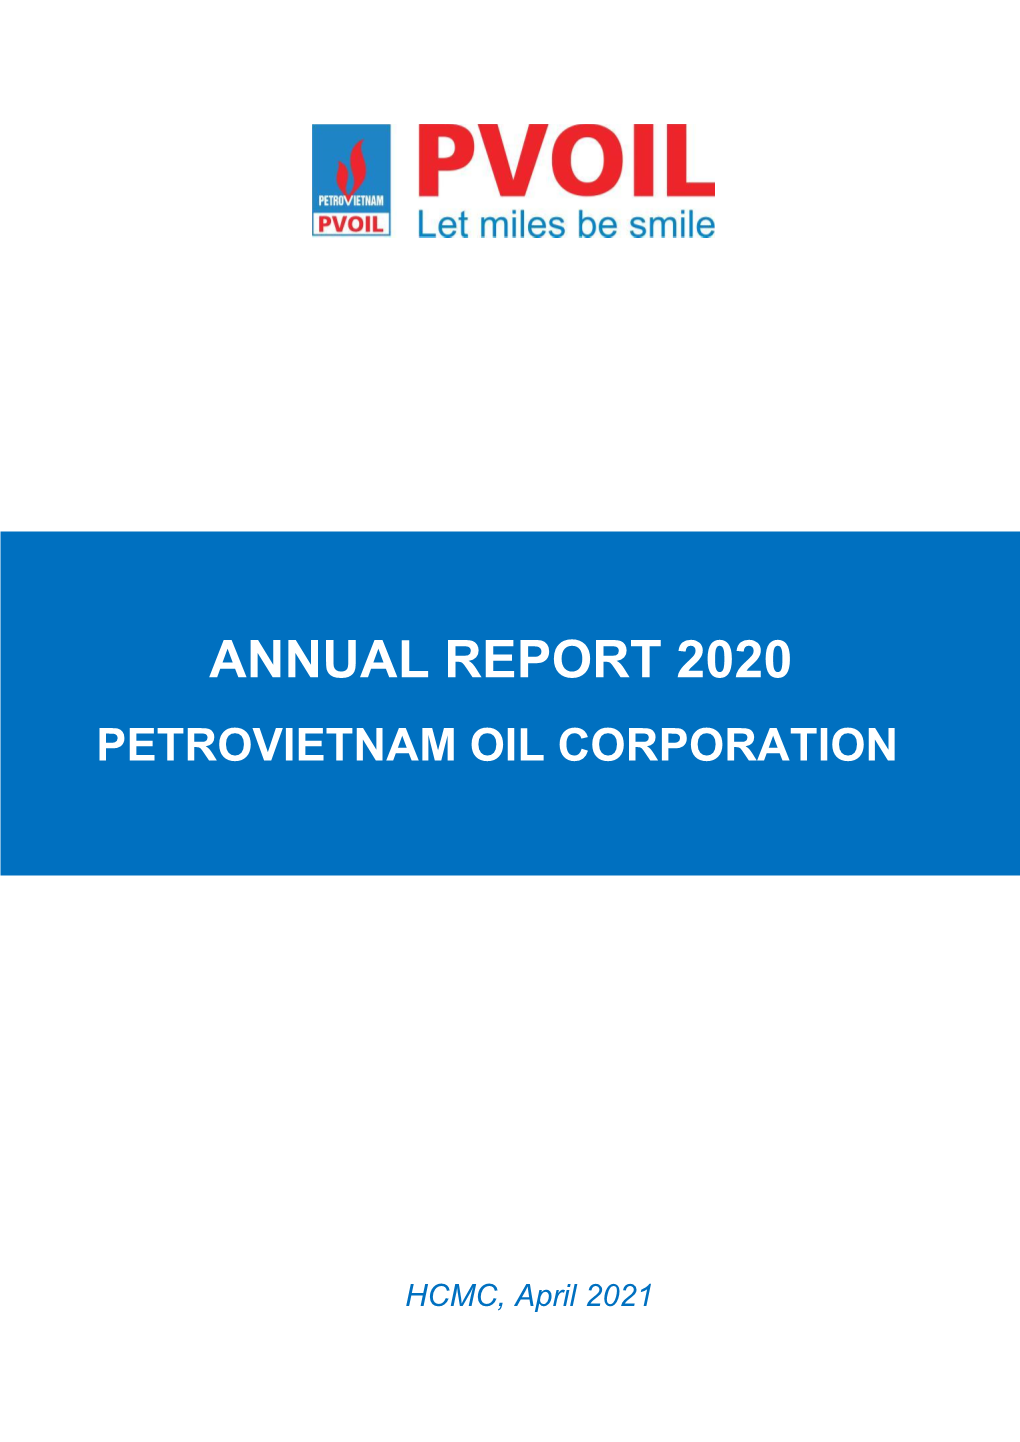 Annual Report 2020 Petrovietnam Oil Corporation